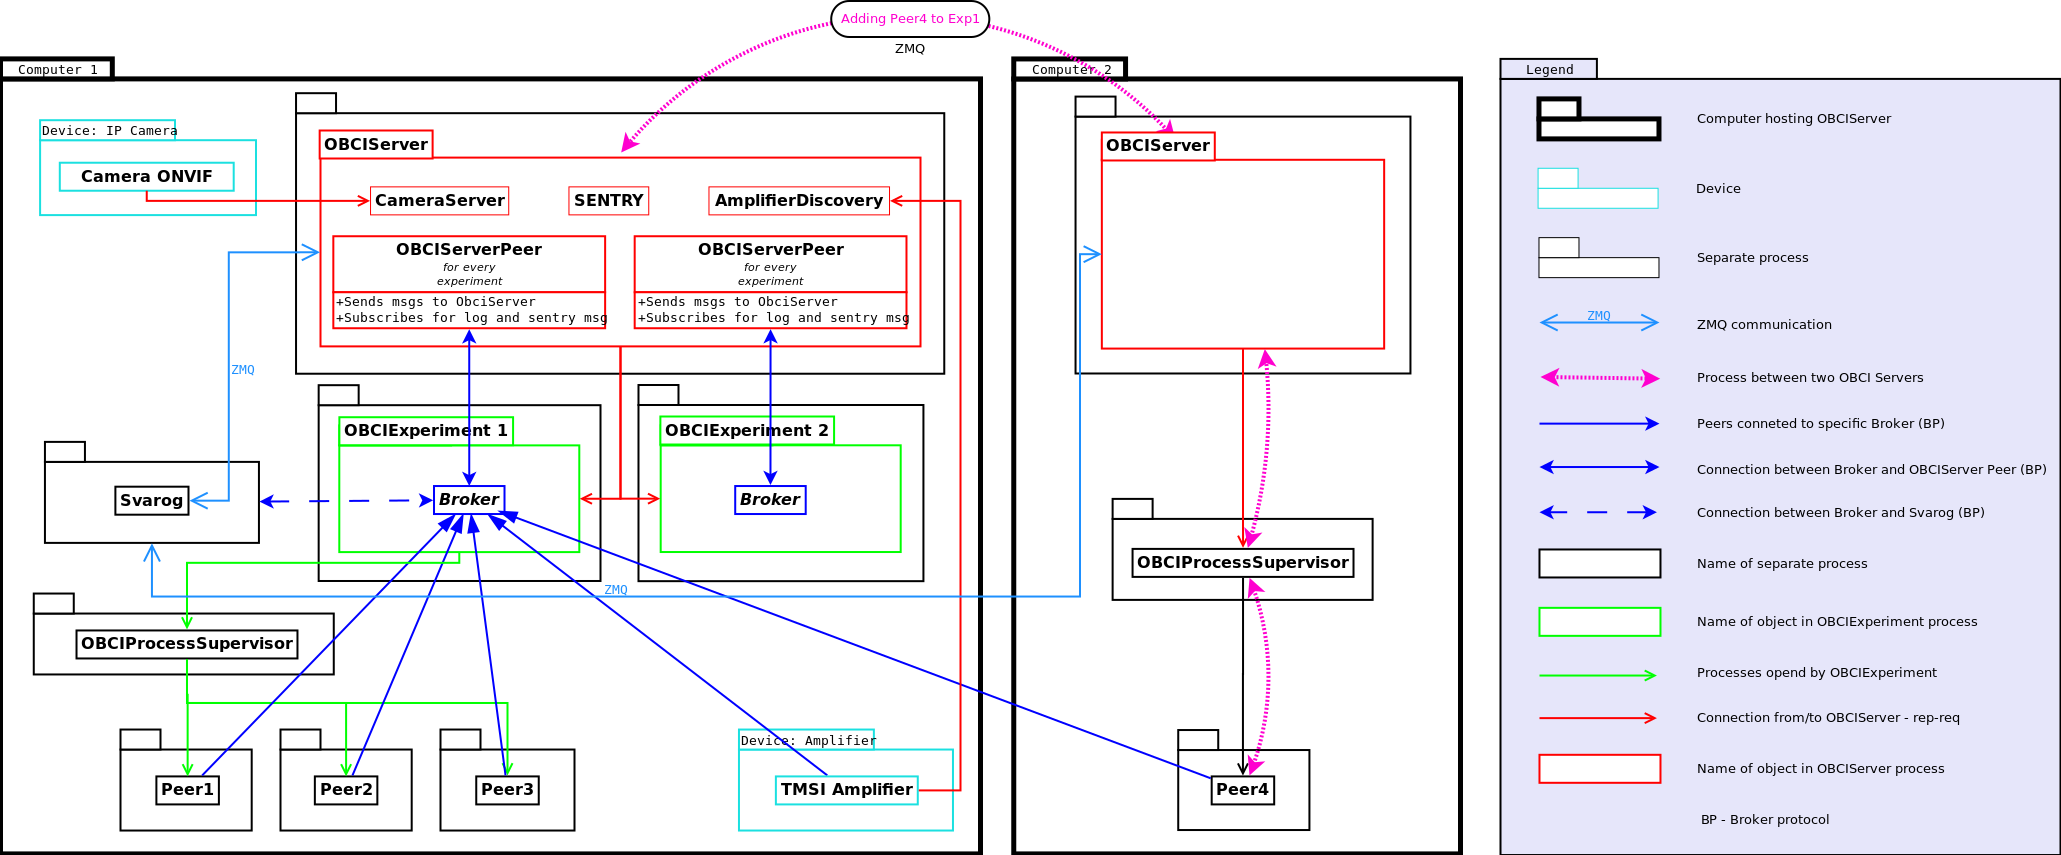 OpenBCI system architecture diagram